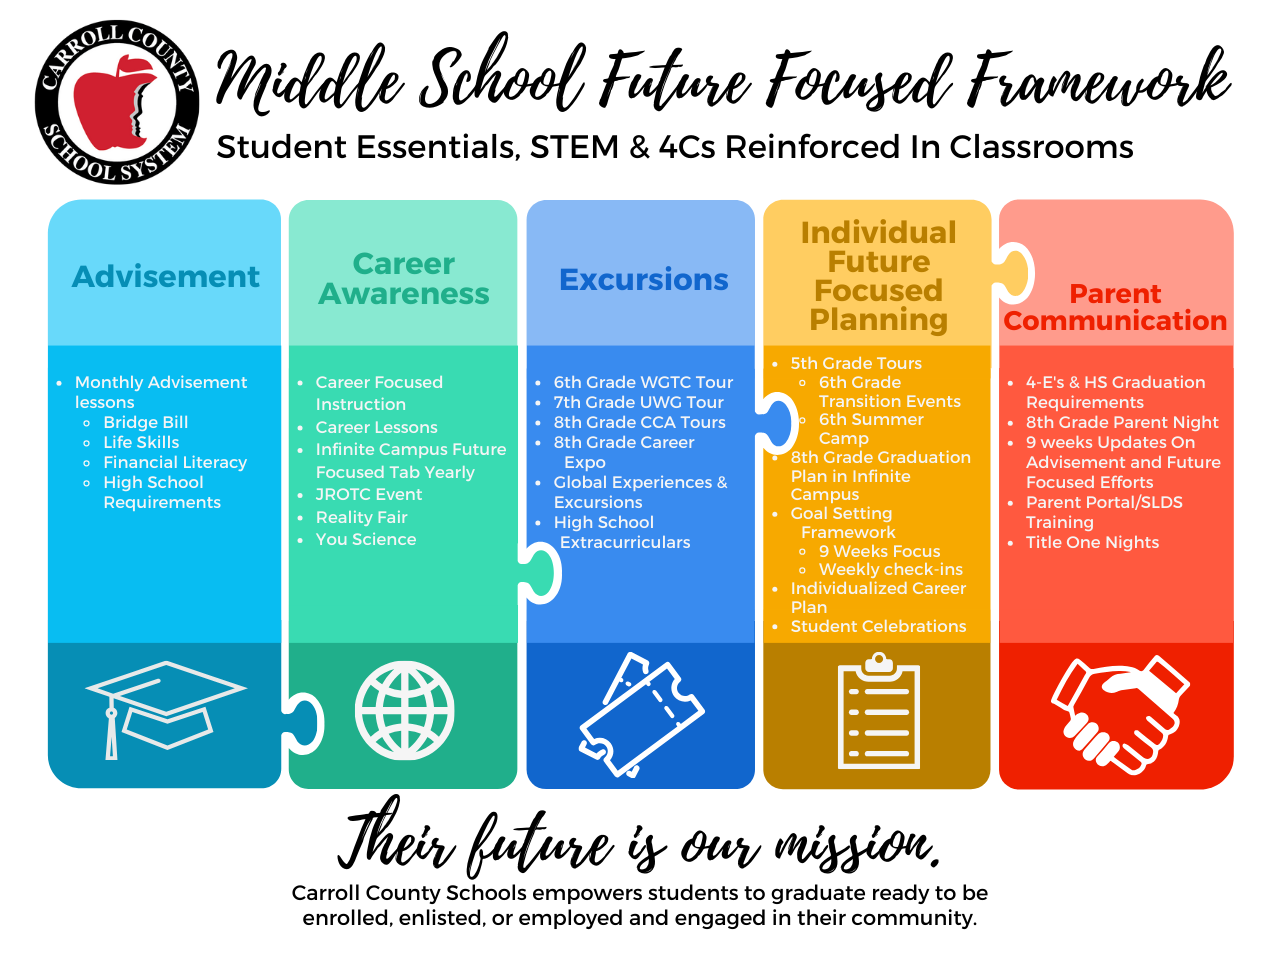 Middle School Future Focused Framework